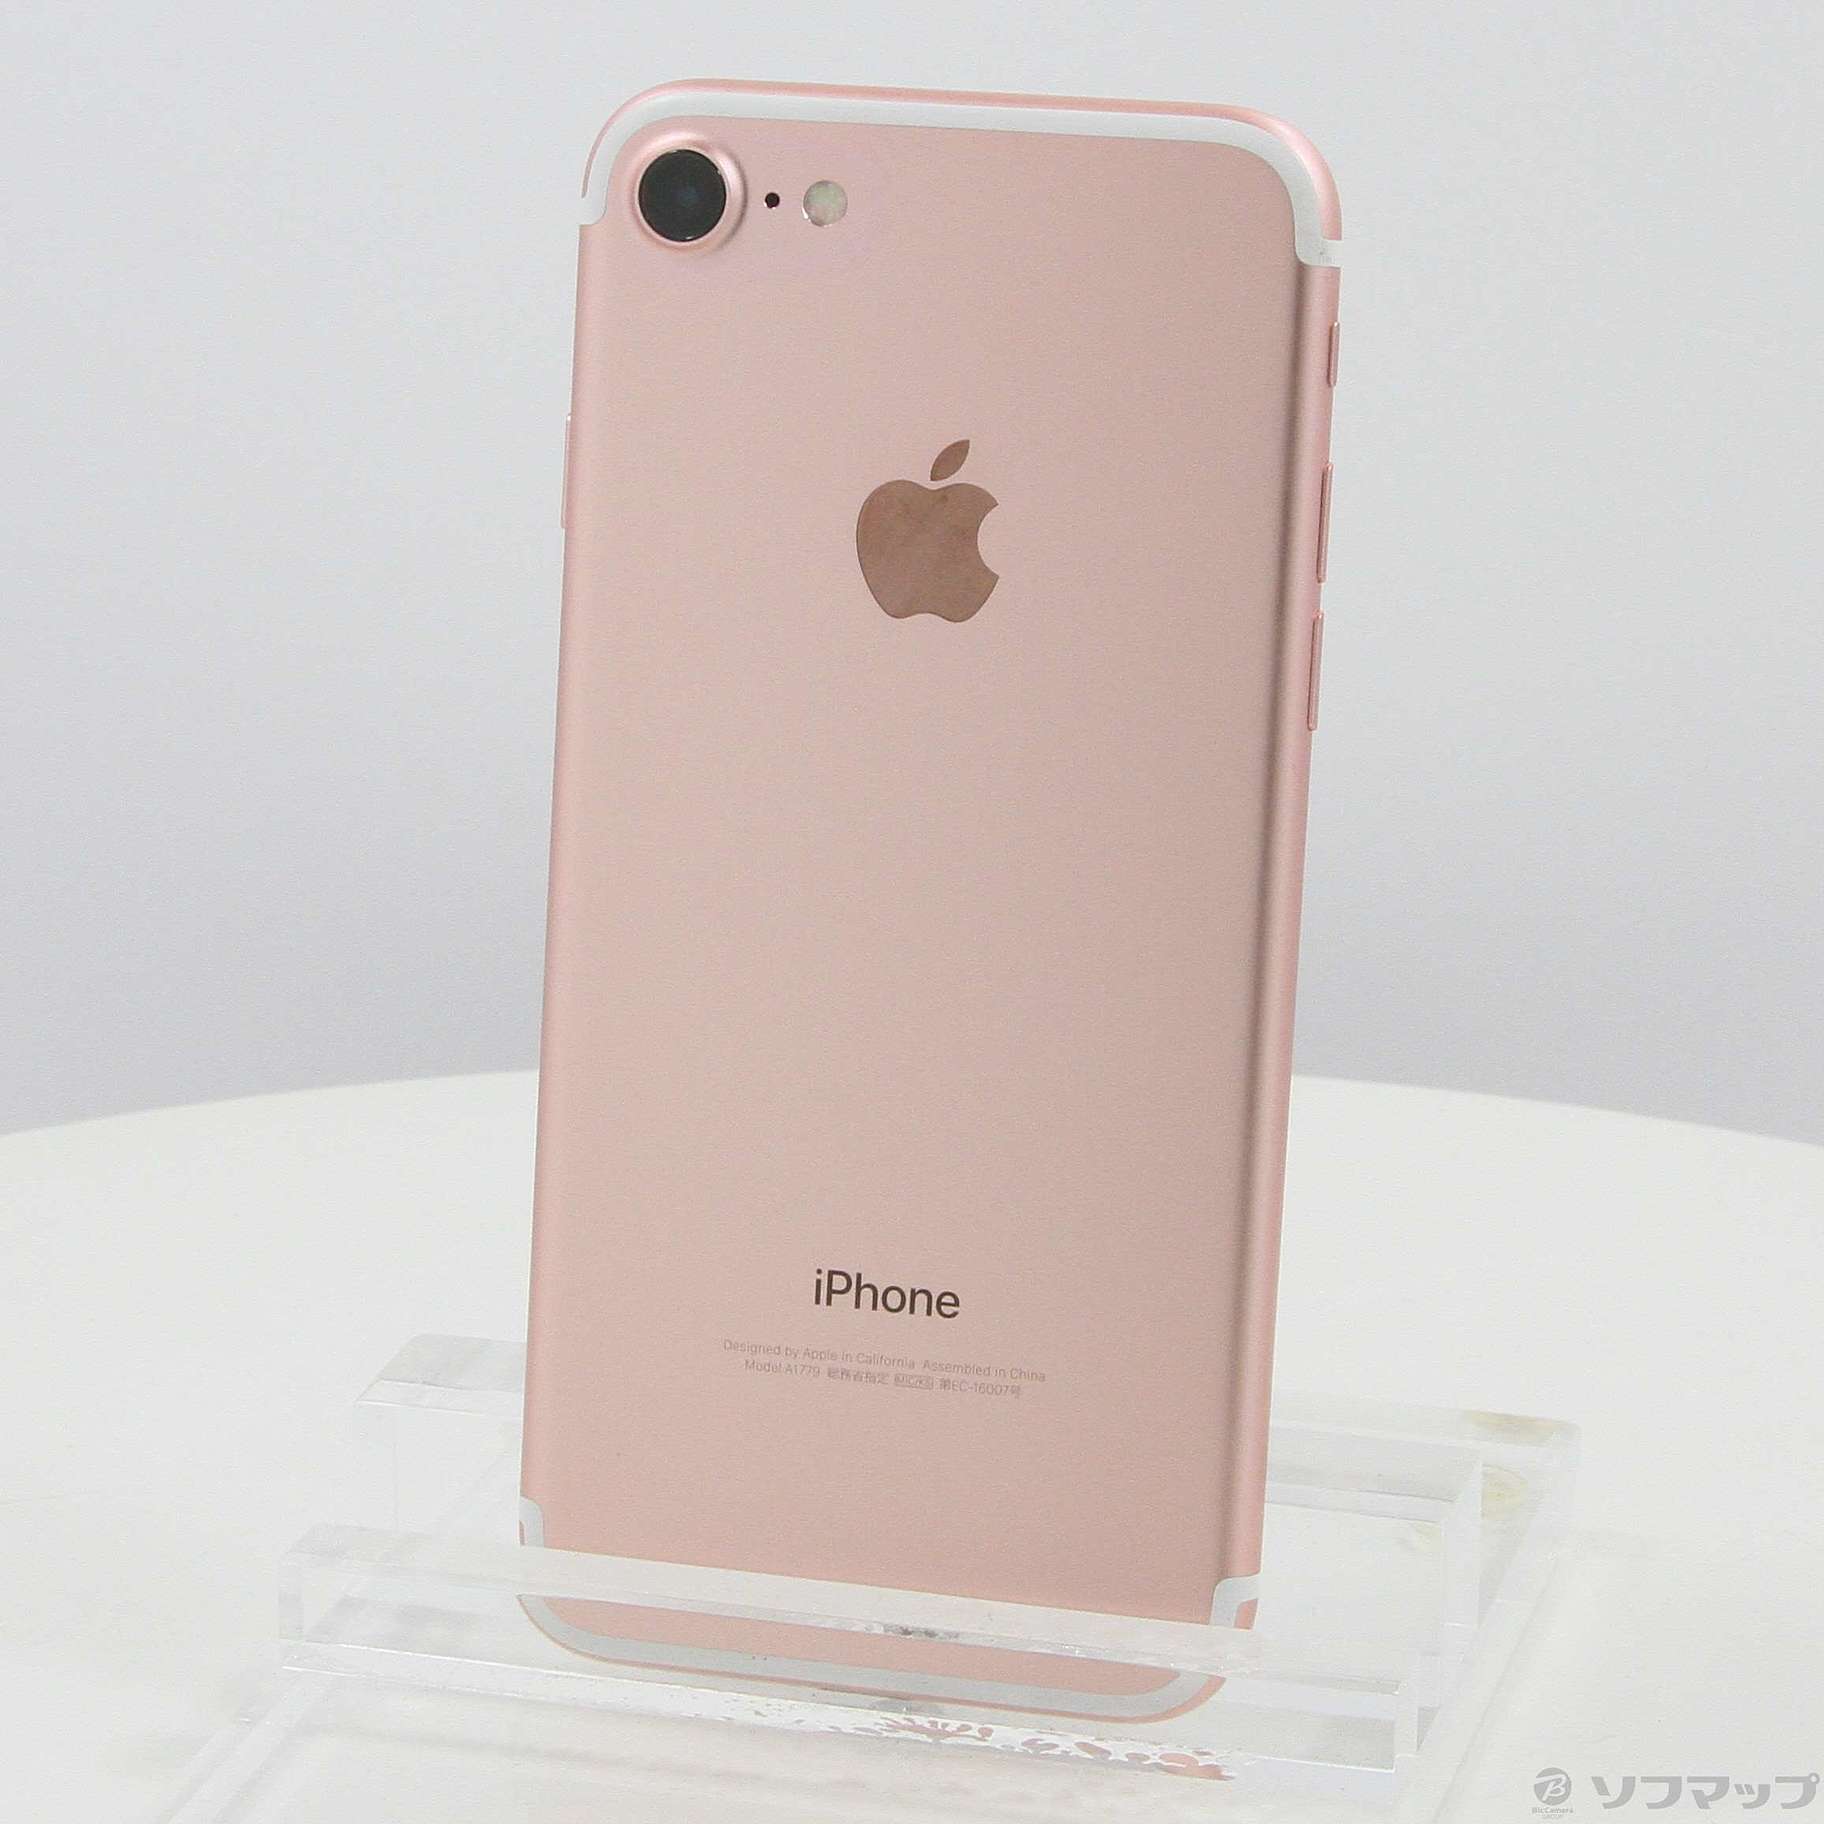 iPhone 7 Rose Gold 128 GB Softbank